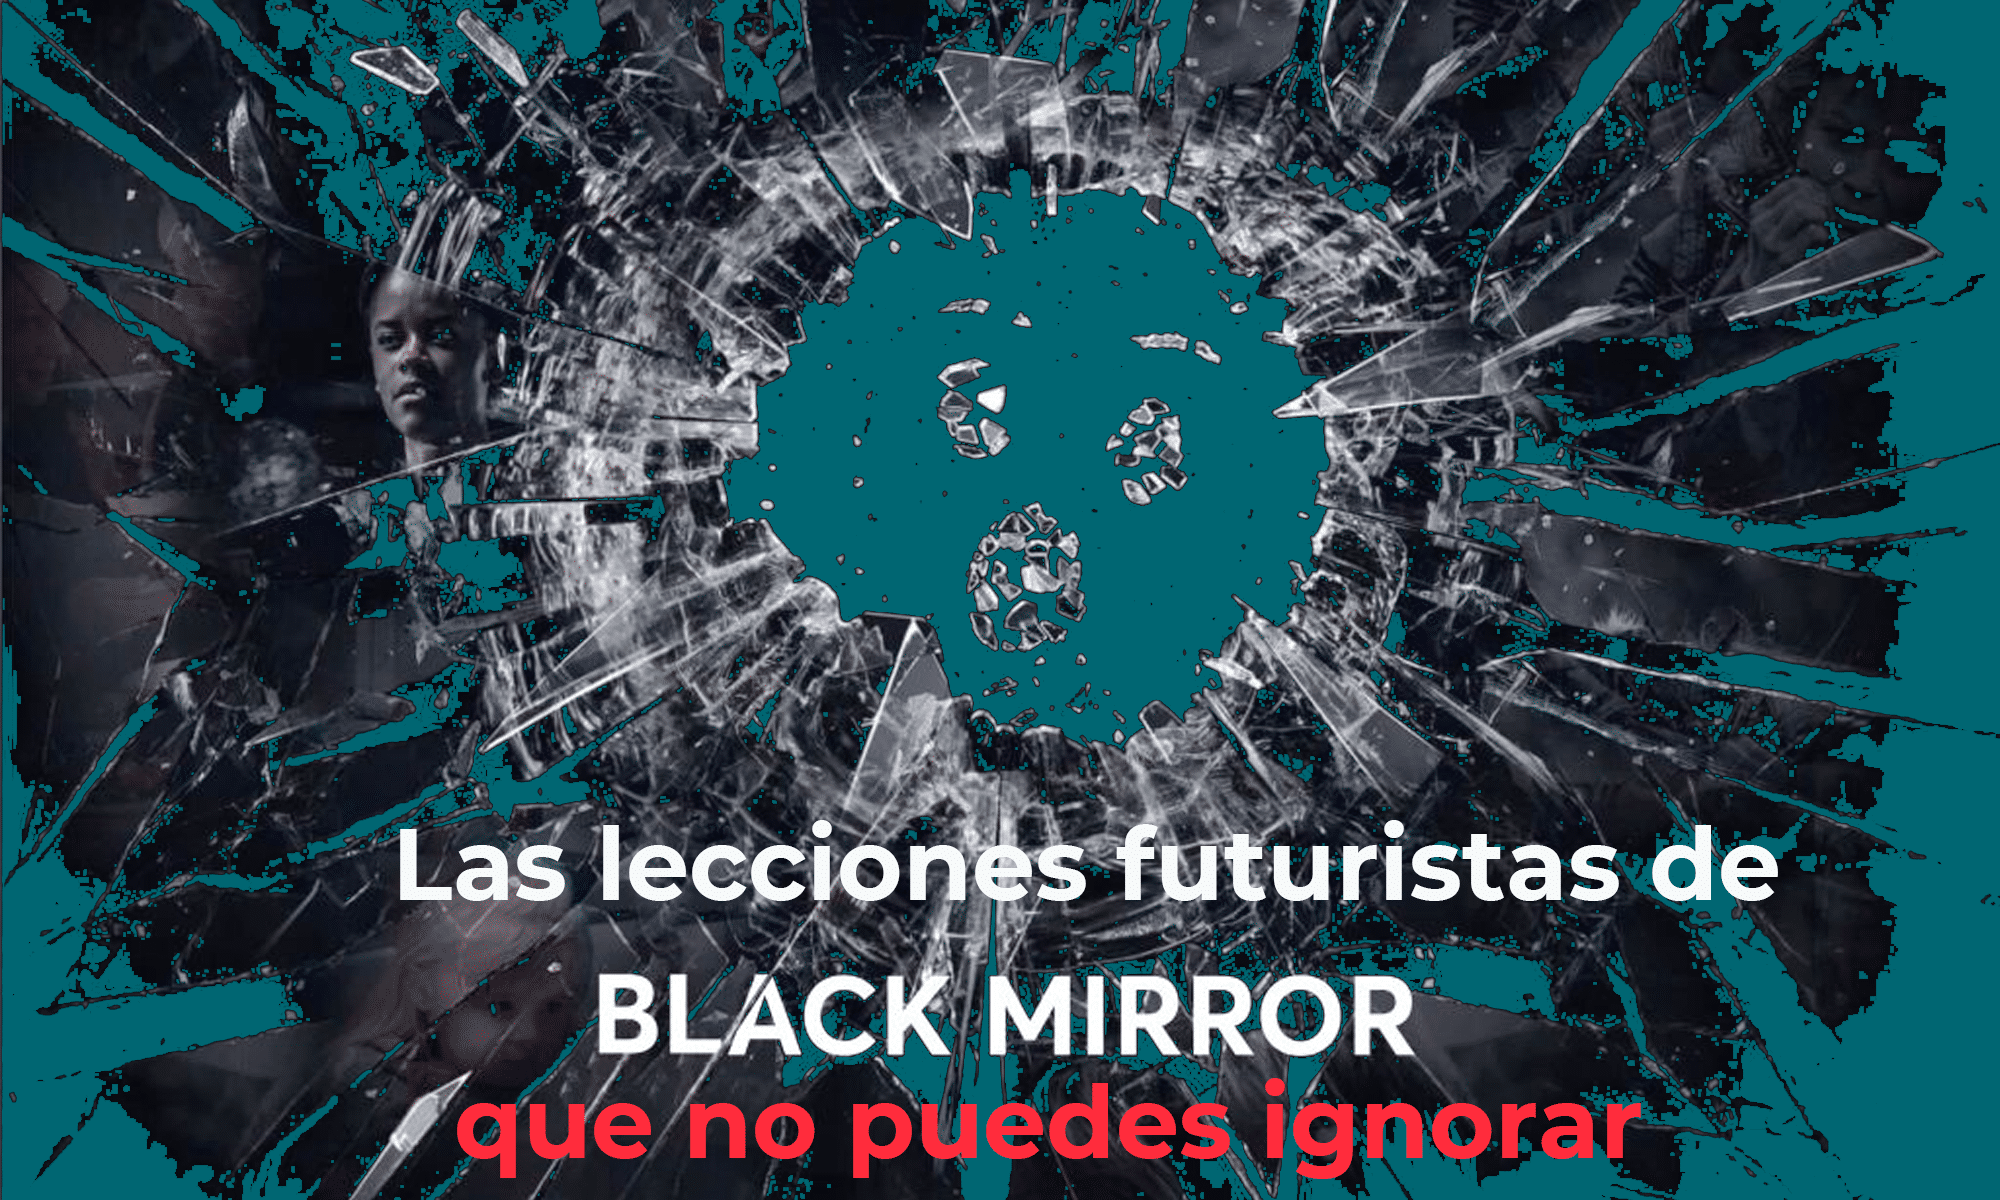 Black Mirror: Descubre los impactantes mensajes de la serie